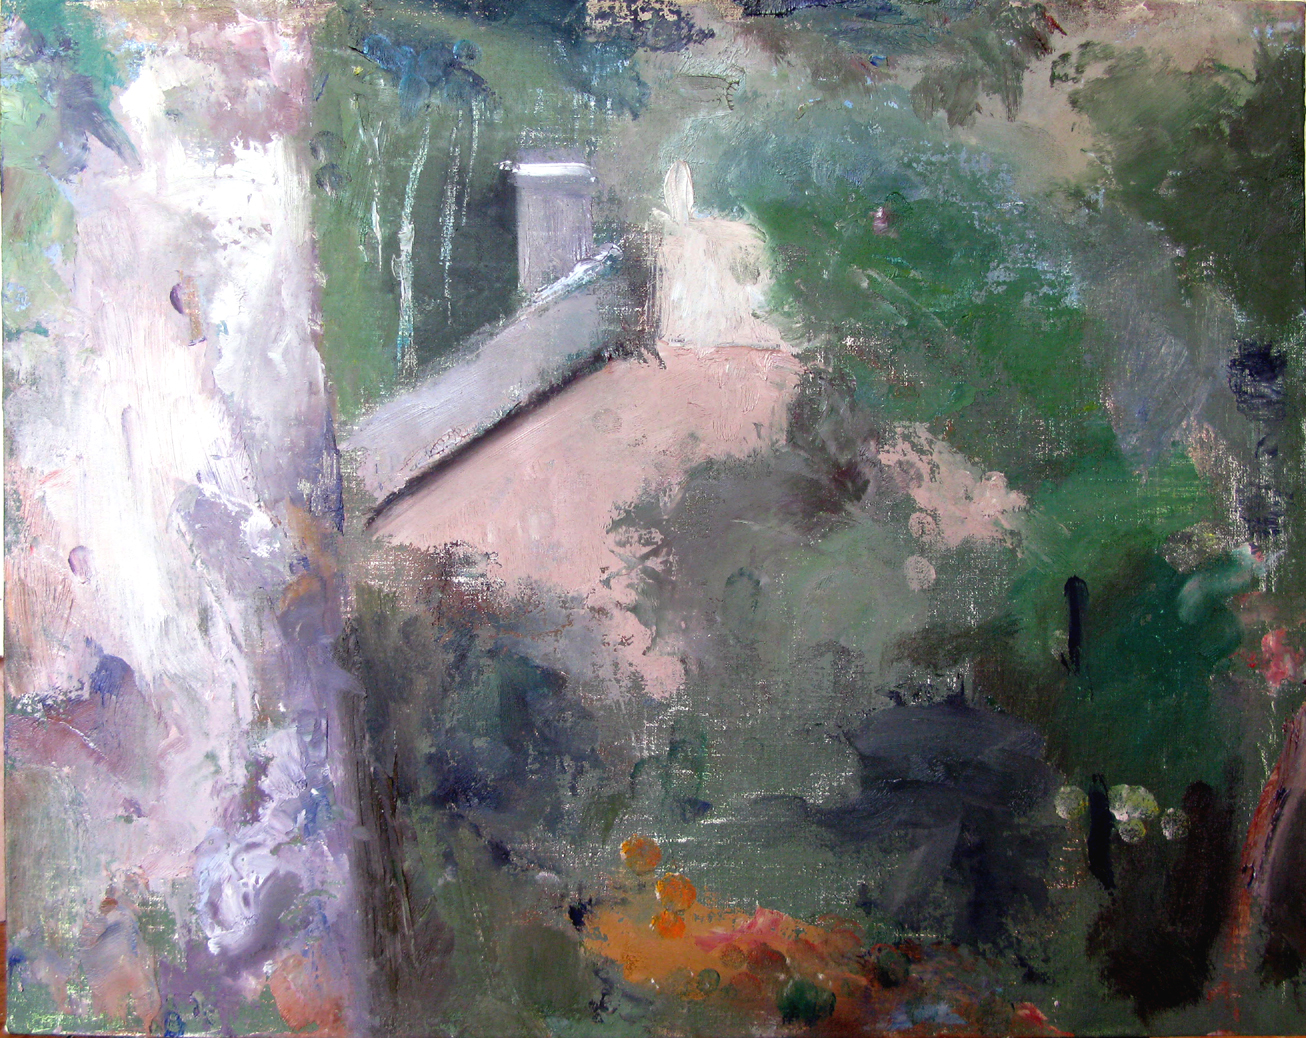 Graves Studio Through the Trees, 11" x 14", oil on panel, 2008.